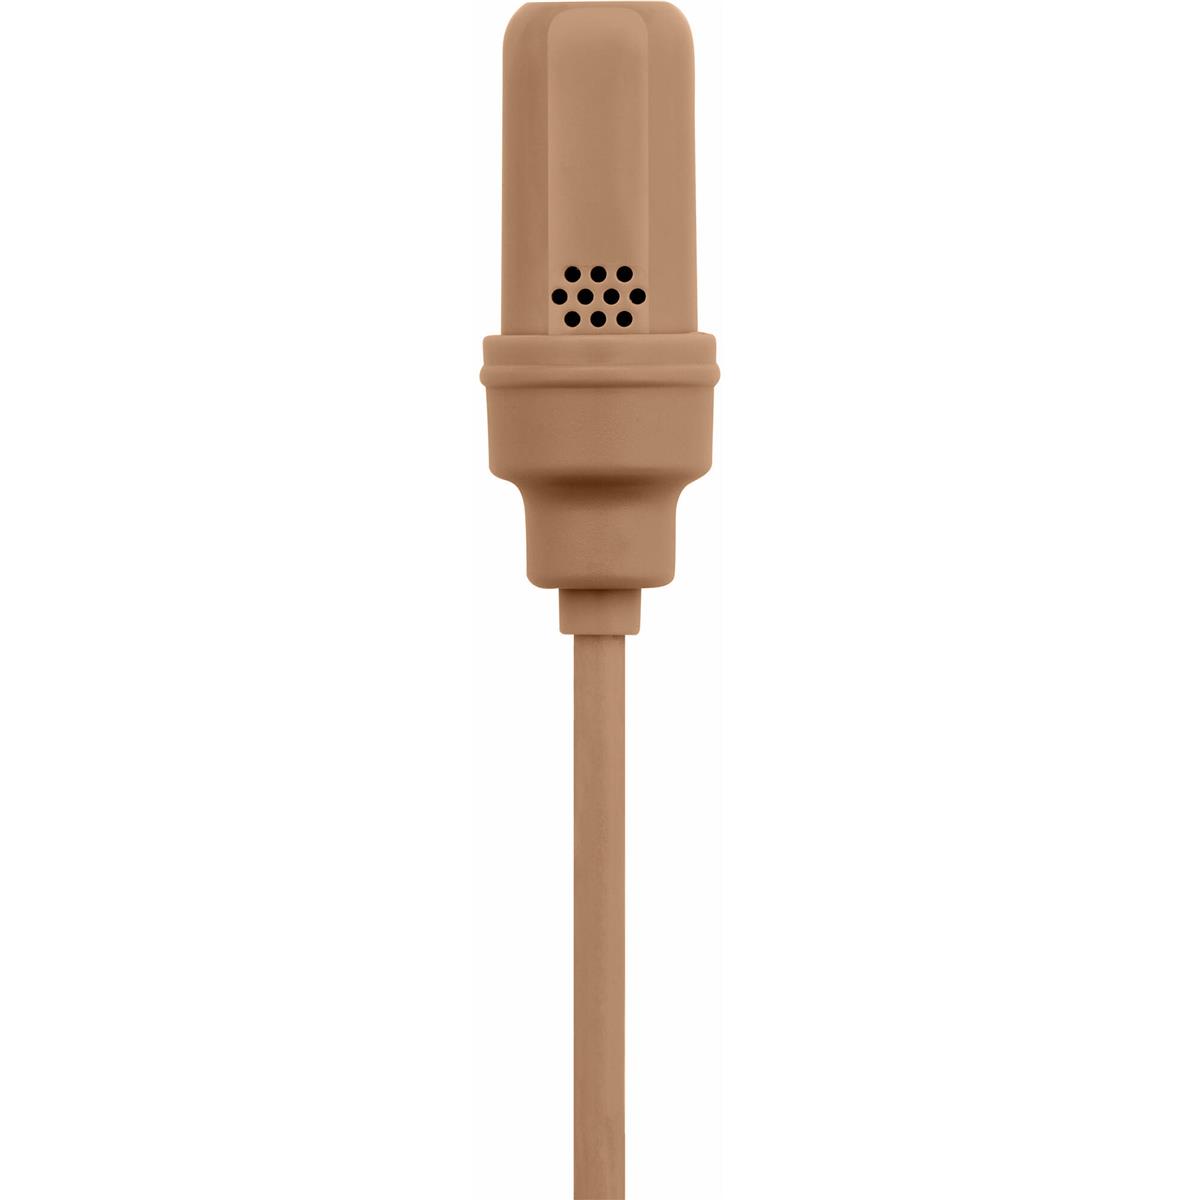 Image of Shure UniPlex UL4 Cardioid Lavalier Microphone Cocoa LEMO3